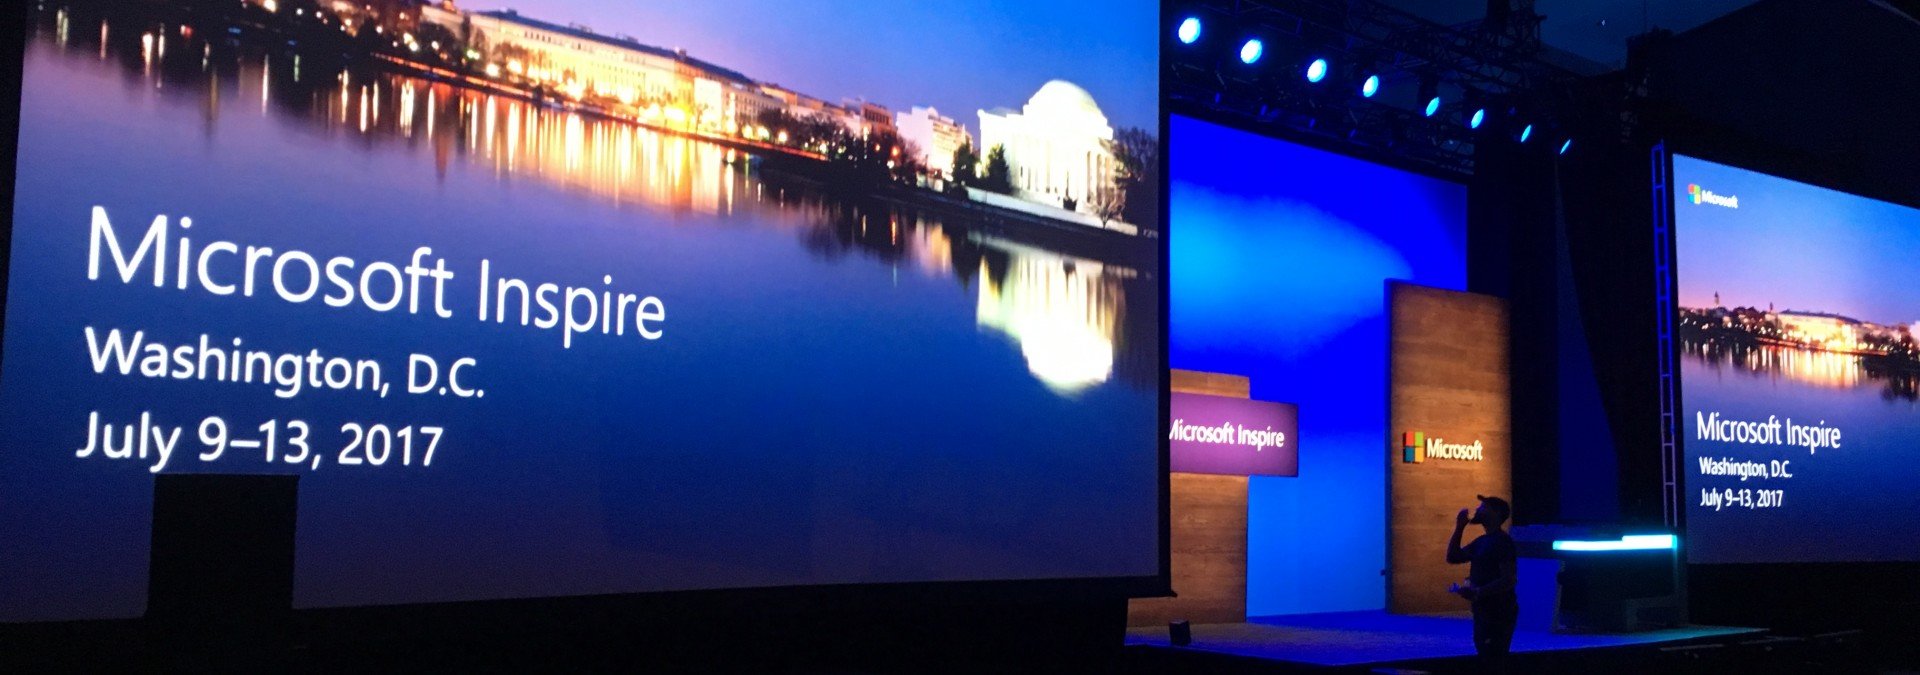 Microsoft Inspire World Wide Conference, Washington, DC